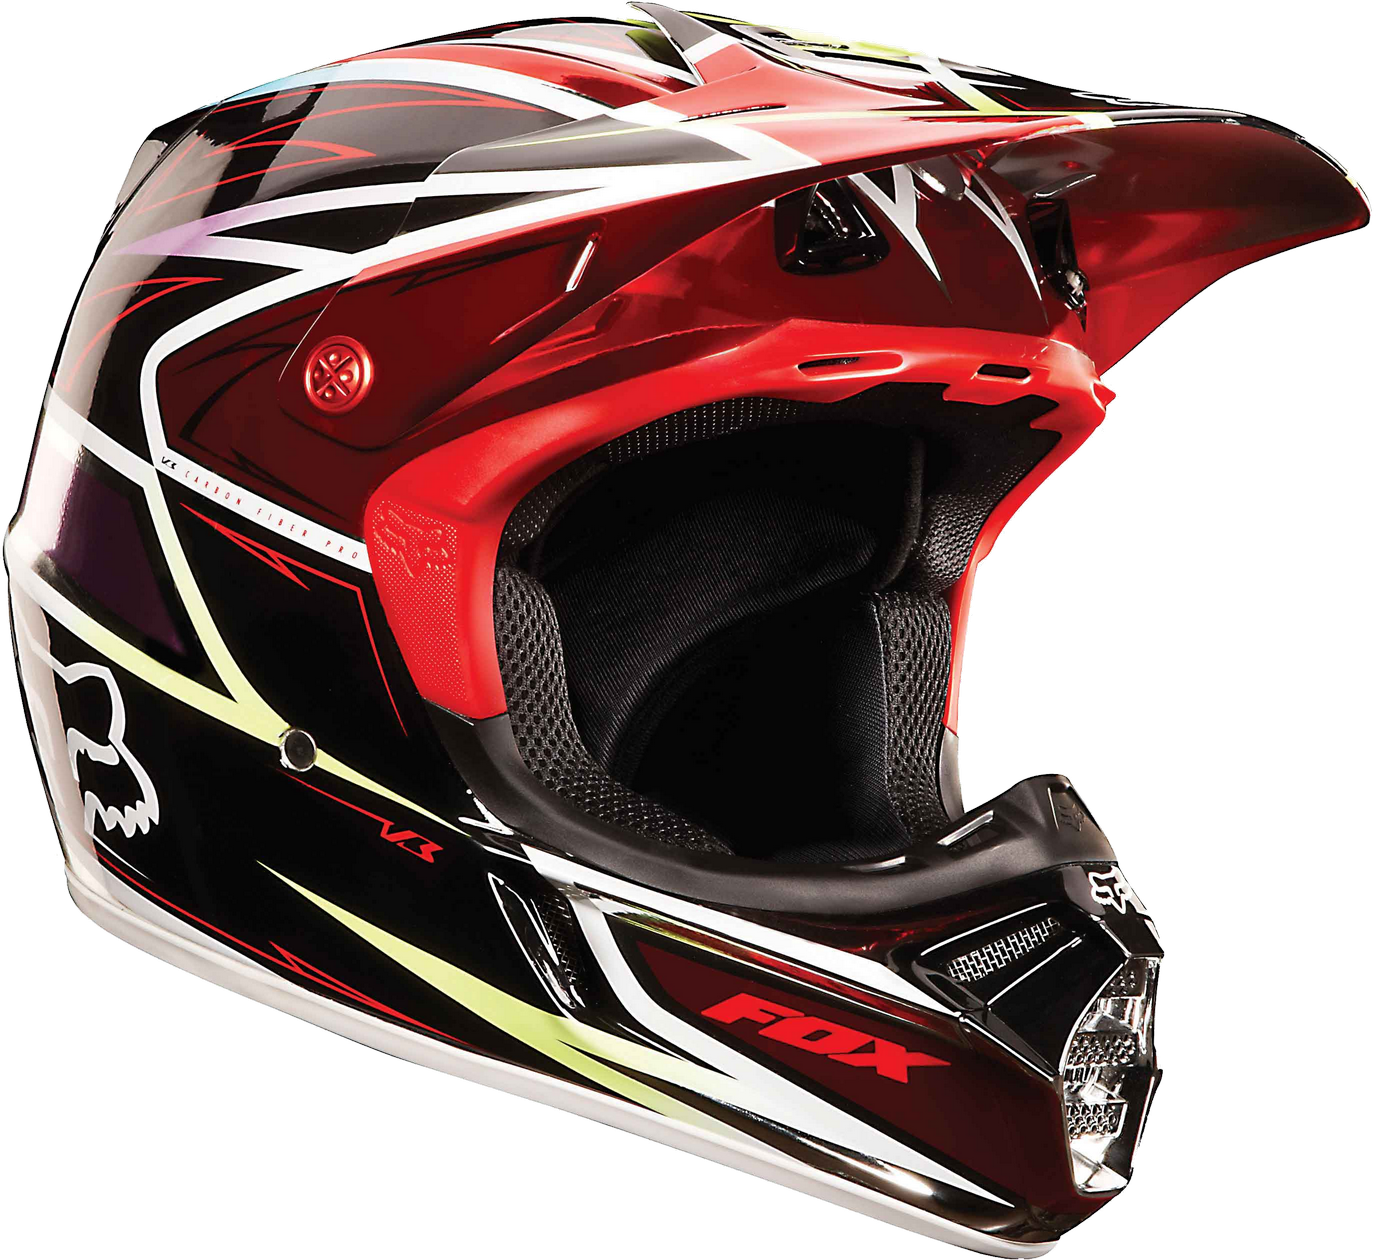 Download PNG image - Motorcycle Helmet PNG Transparent Image 